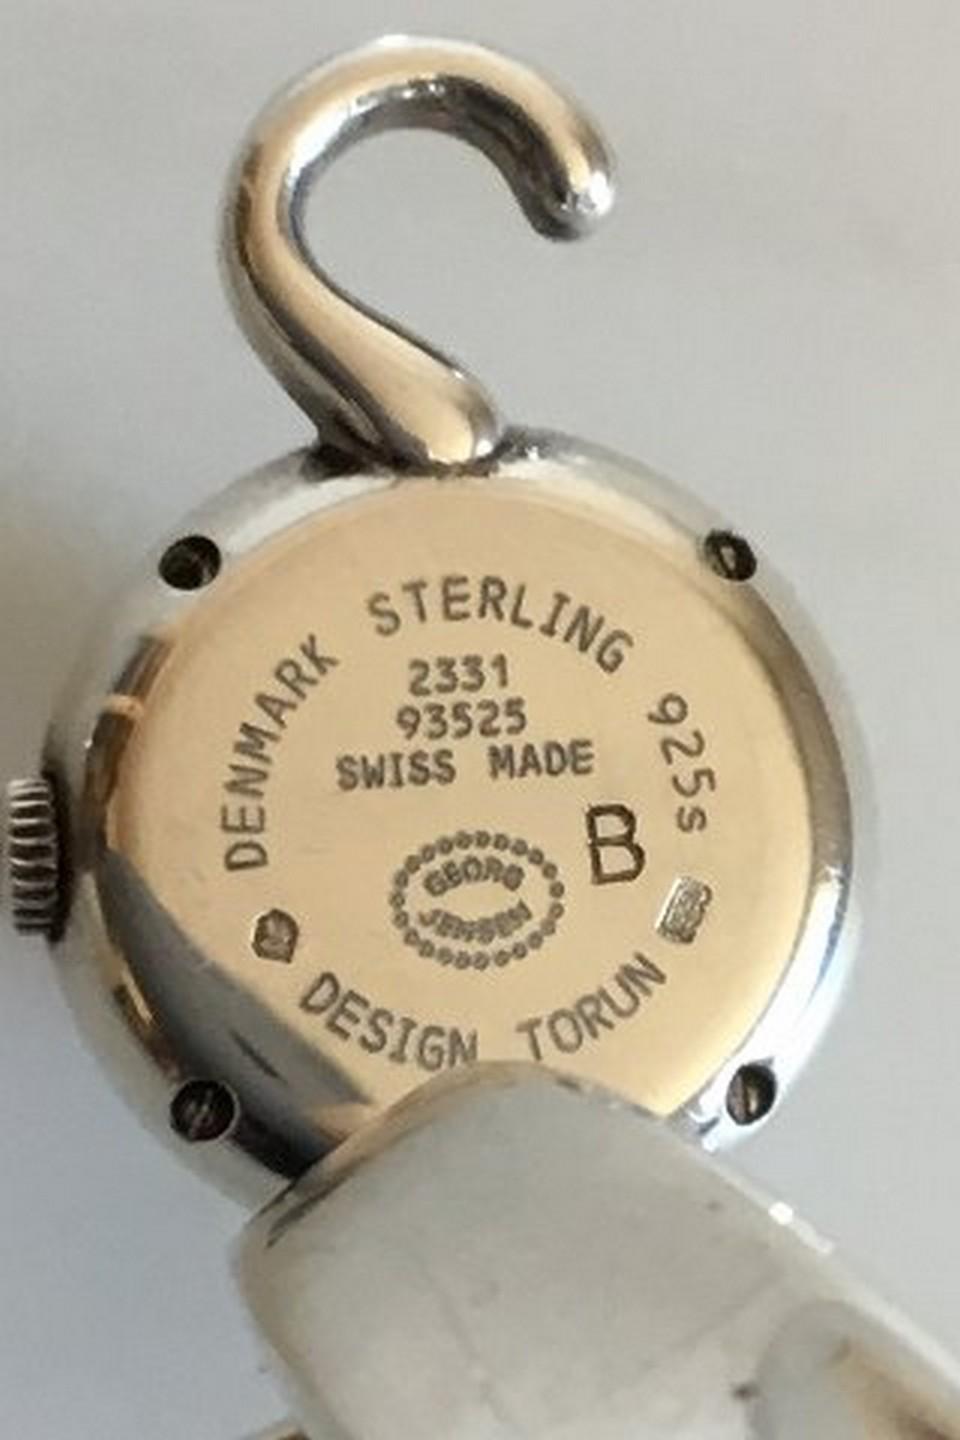 Georg Jensen Sterling Silver Bangle Watch with Rock Crystal Face No 231. Designed by Vivianna Torun Bülow-Bübe in original box. Measures 5.5 cm / 2 11/64 in dia. Weighs 46.2 g / 1.63 oz.